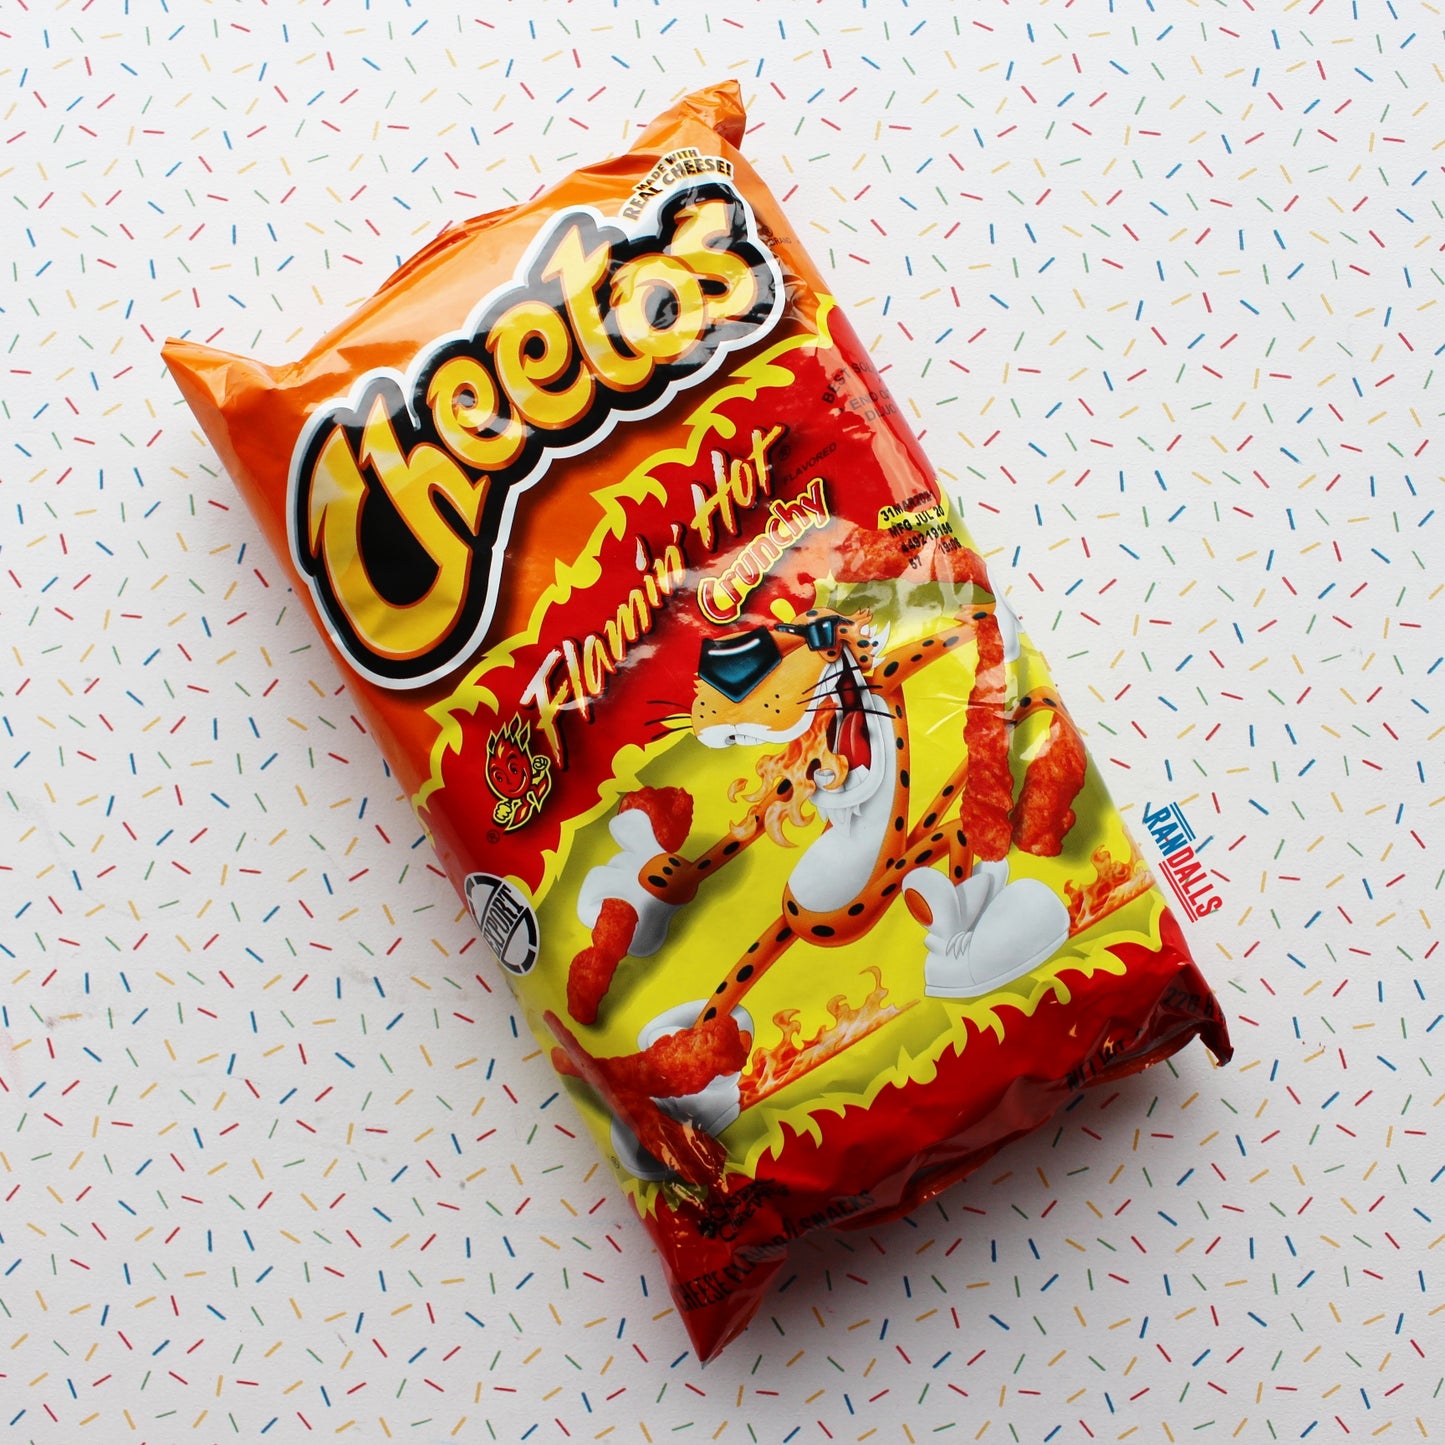 cheetos flamin' hot, cheese puffs, crisps, chips, spicy, hot, randalls